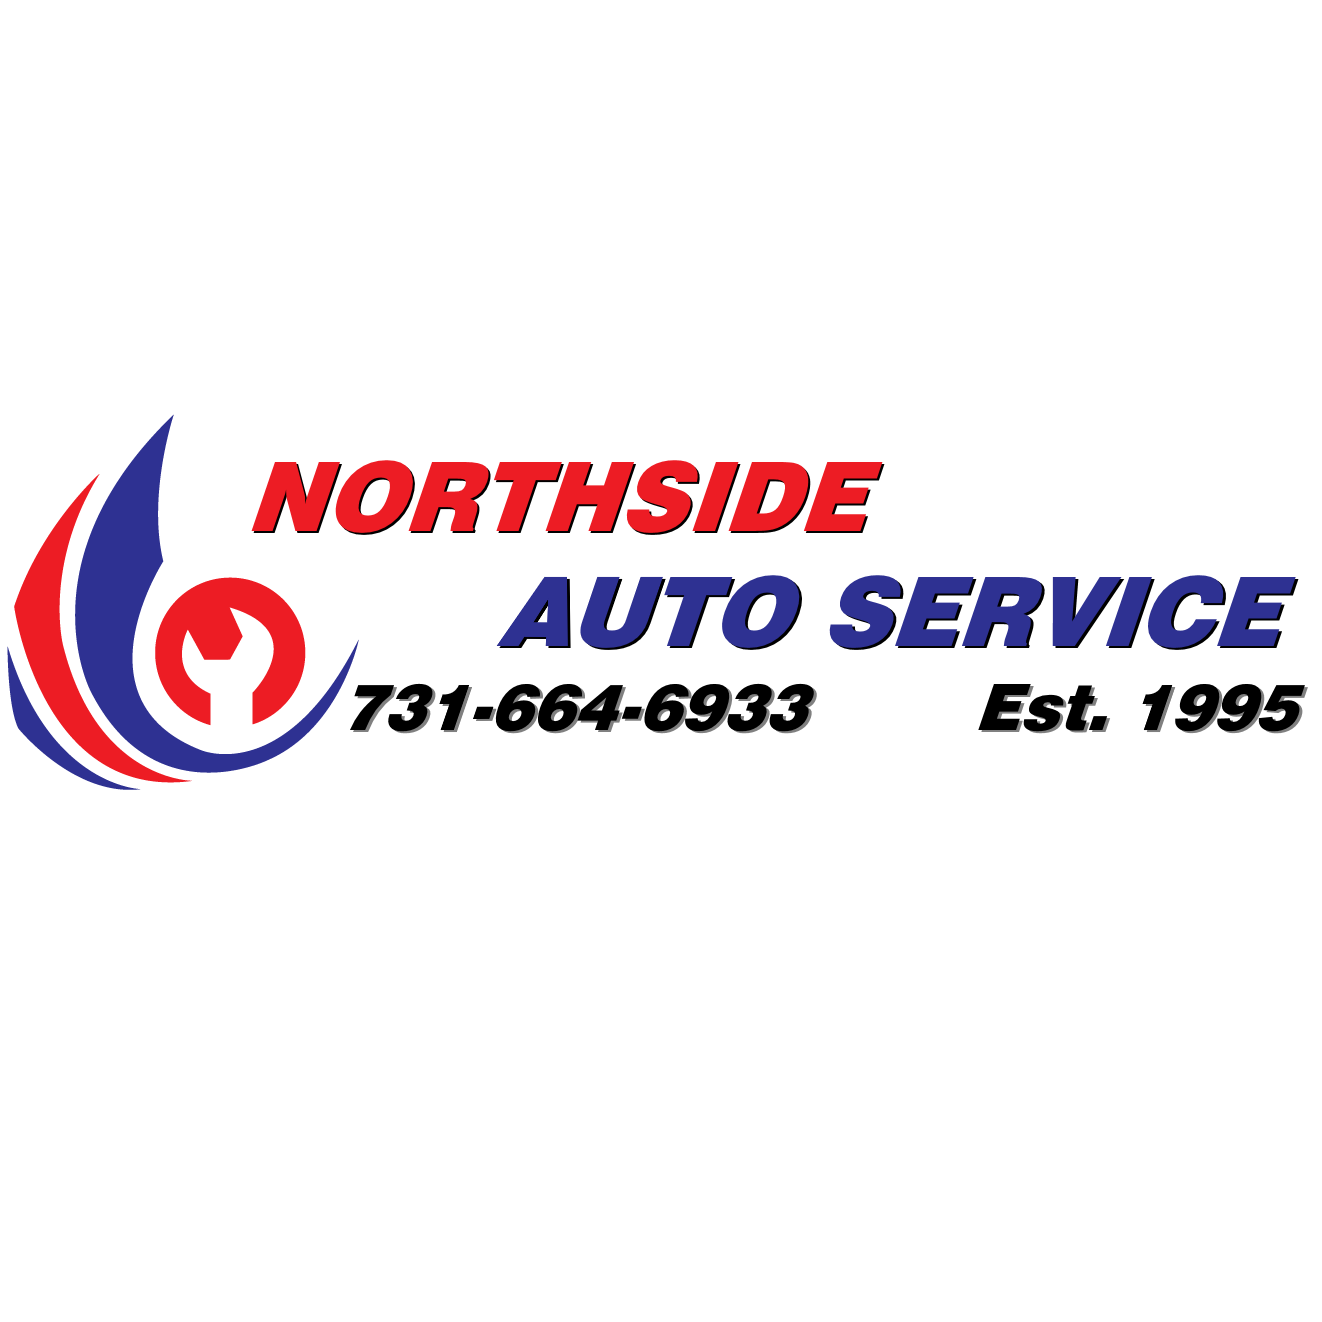 Northside Auto Service Jackson (731)664-6933